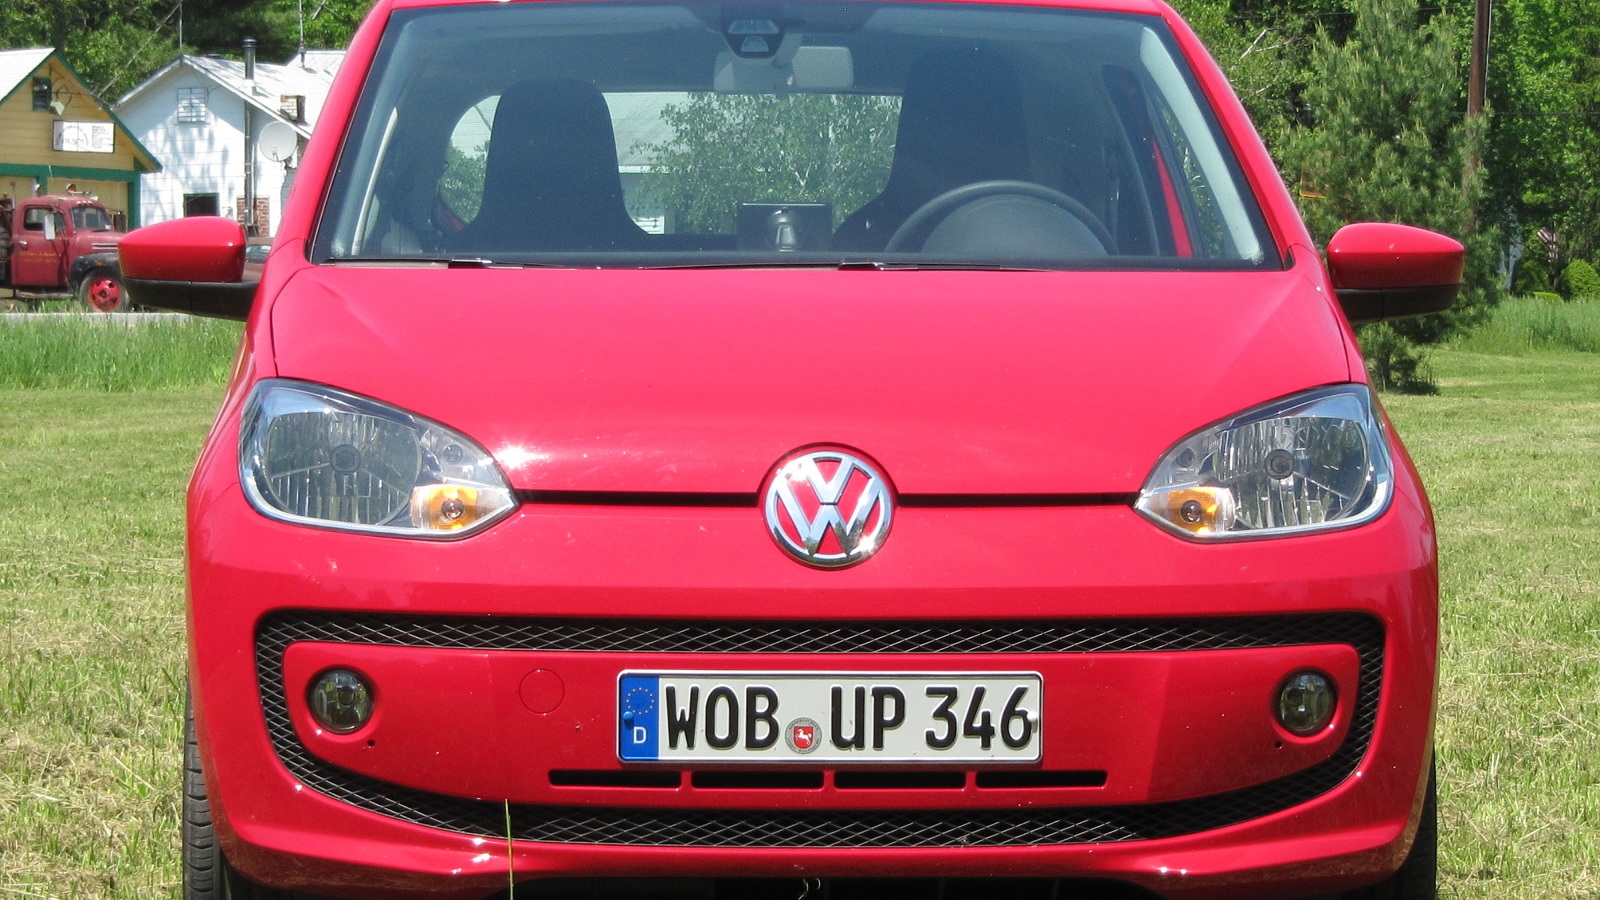 2012 Volkswagen Up minicar (German model), road test, Catskill Mountains, NY, May 2012